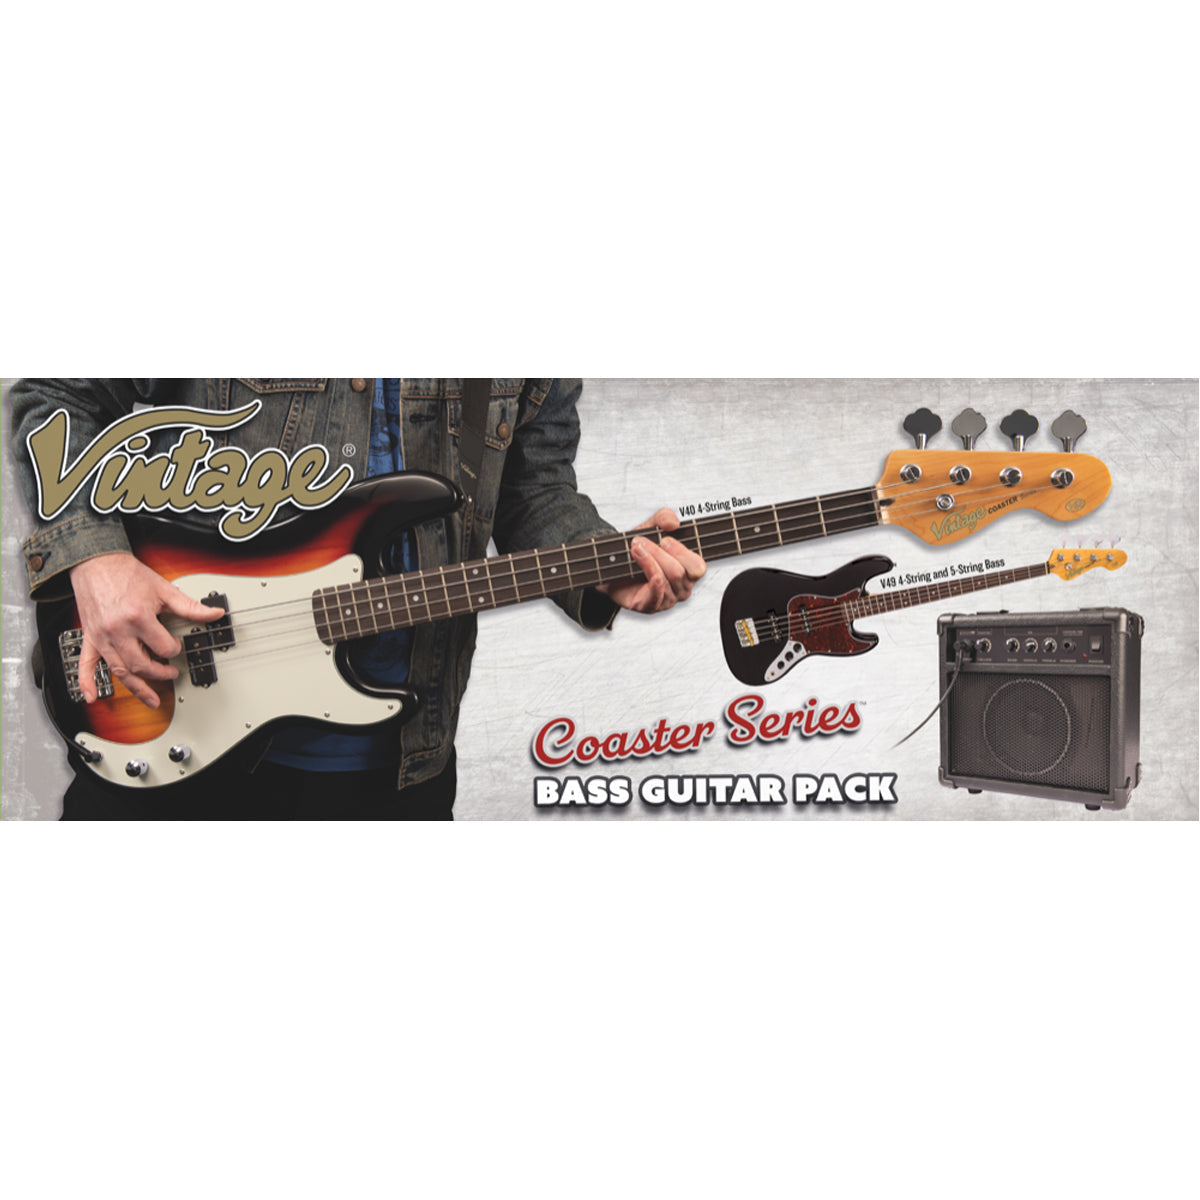 Vintage V49 Coaster Series Bass Guitar Pack ~ Boulevard Black, Bass Guitar Packs for sale at Richards Guitars.